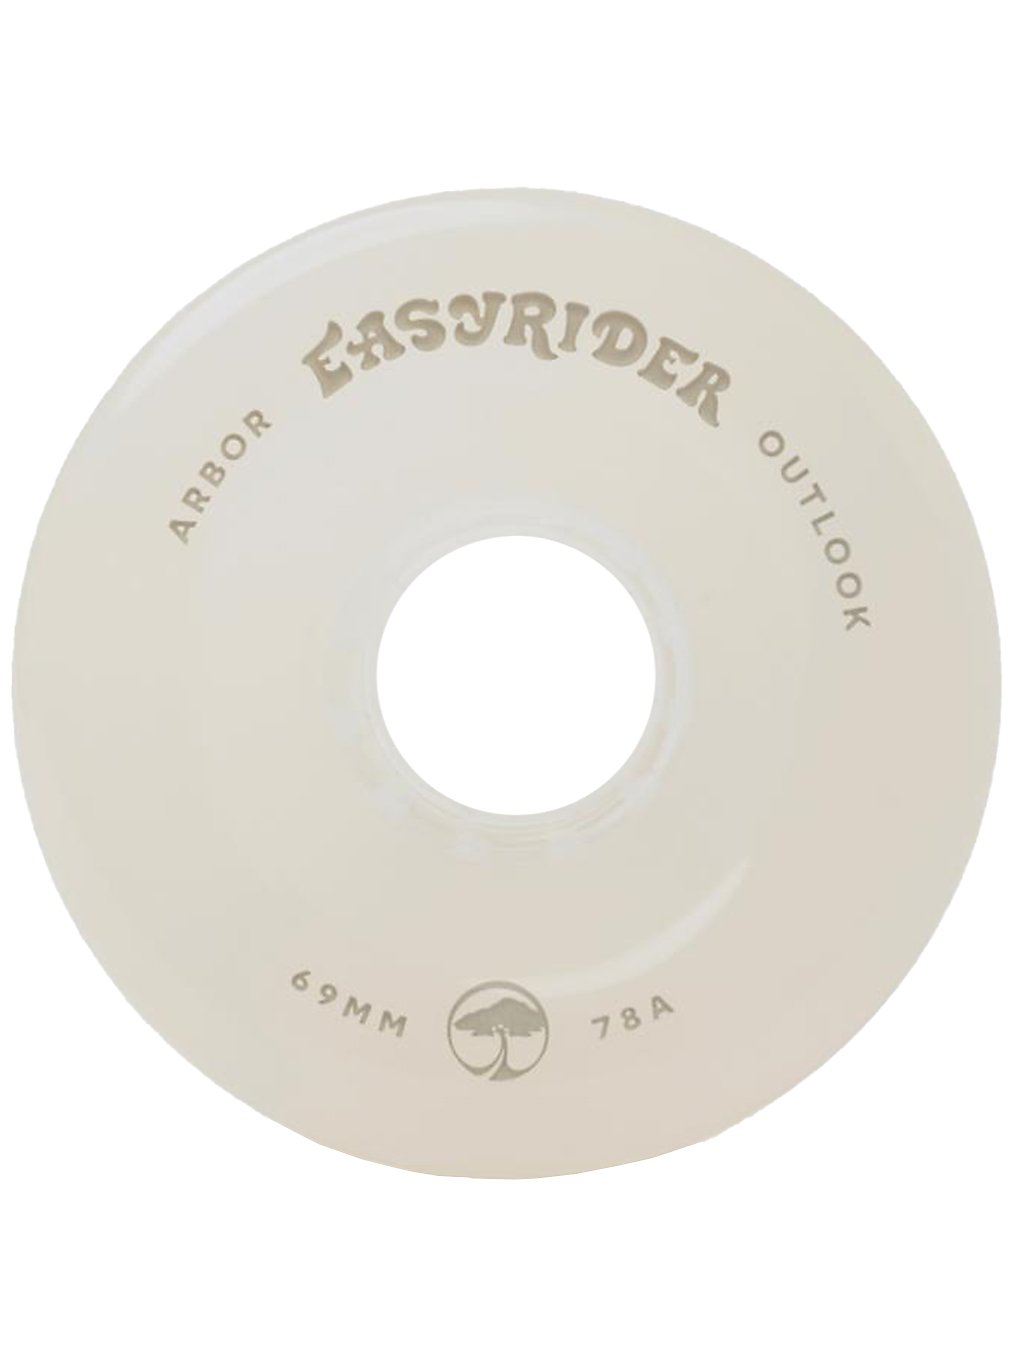 Arbor Easyrider Outlook 78a 69mm Wheels ghost white